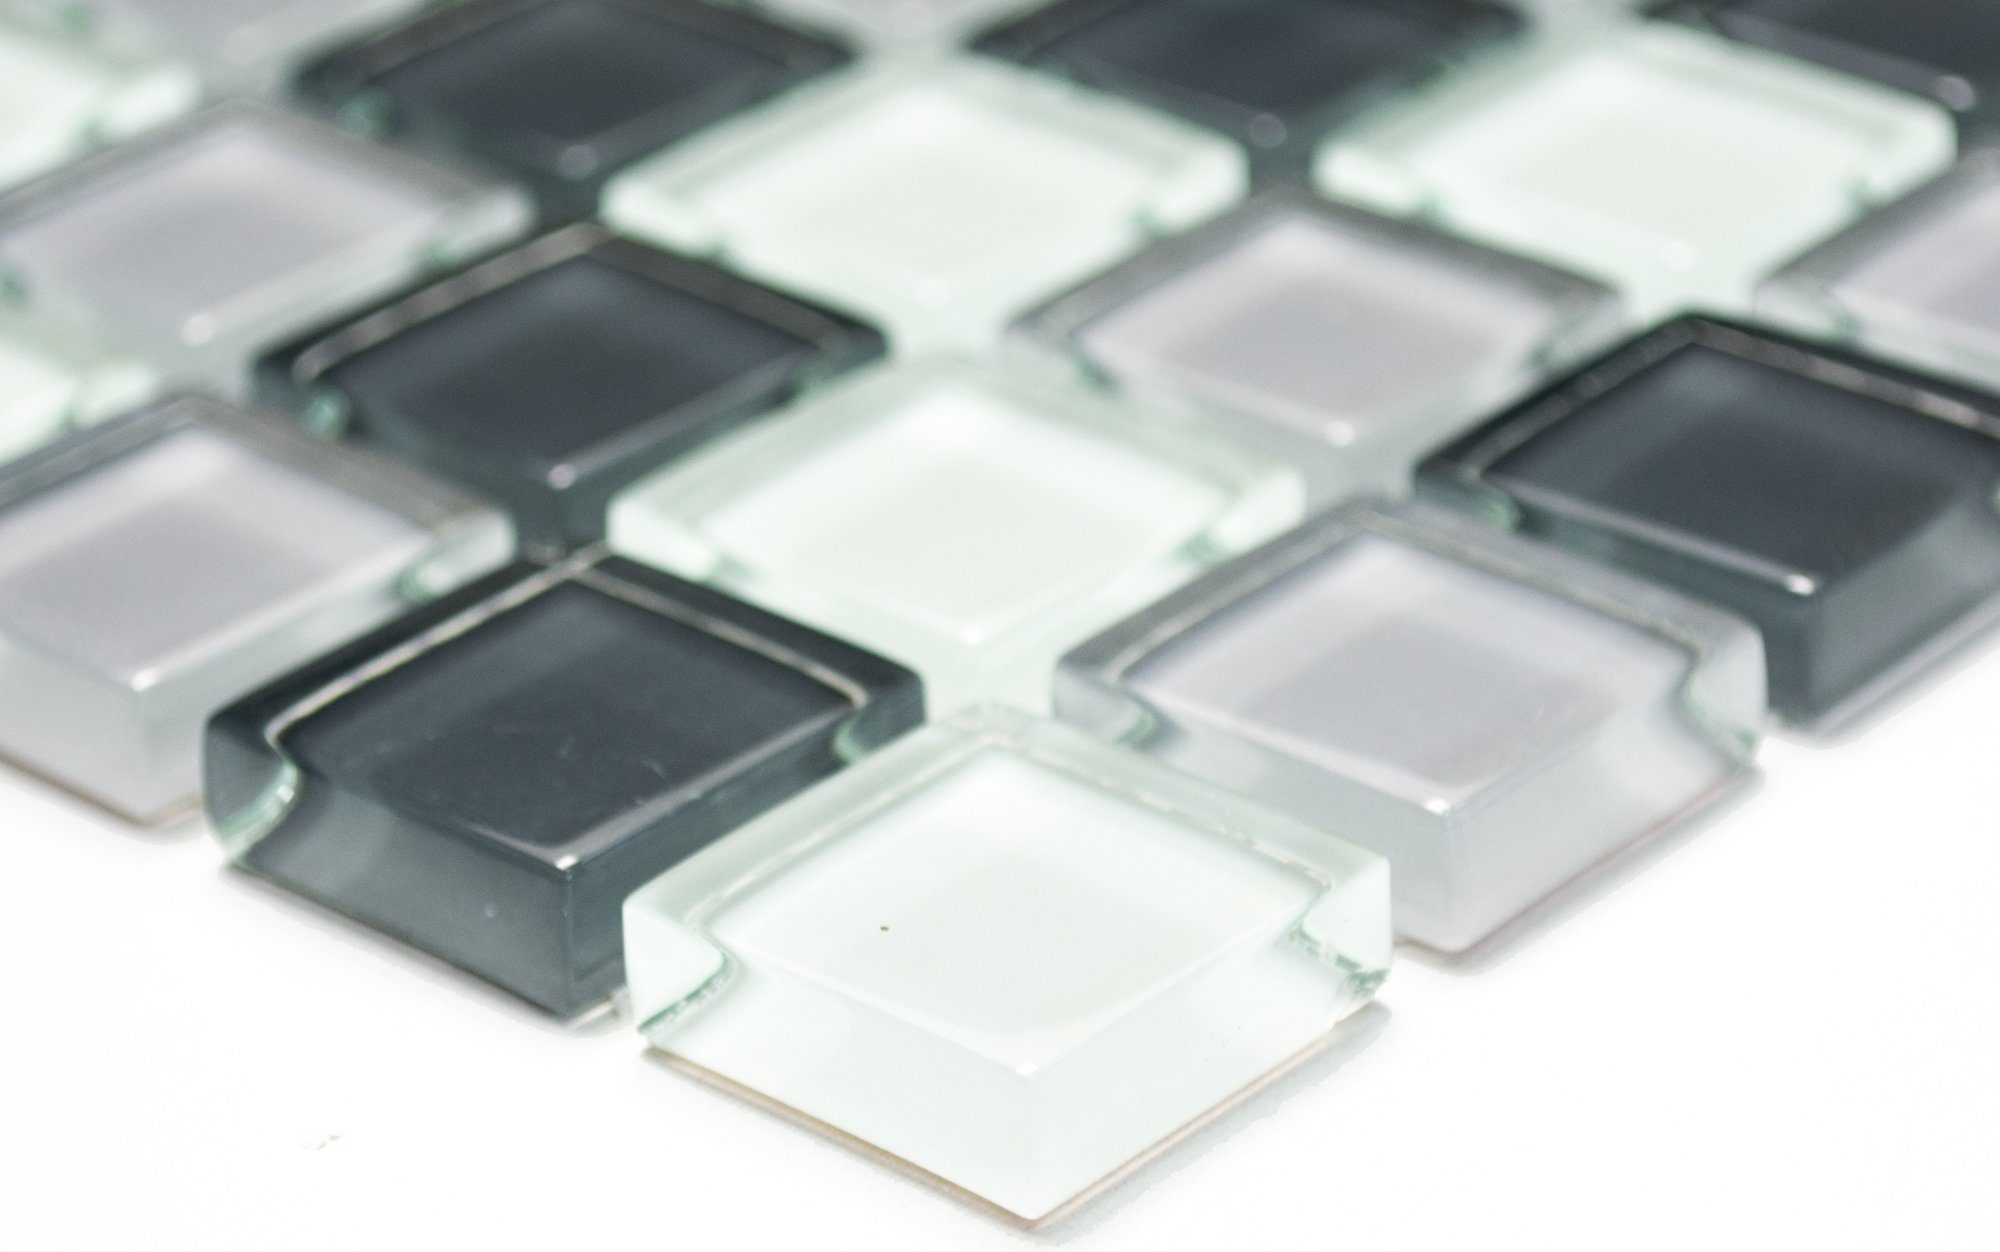 10 Mosani Crystal Mosaik Matten glänzend / Mosaikfliesen grau Glasmosaik